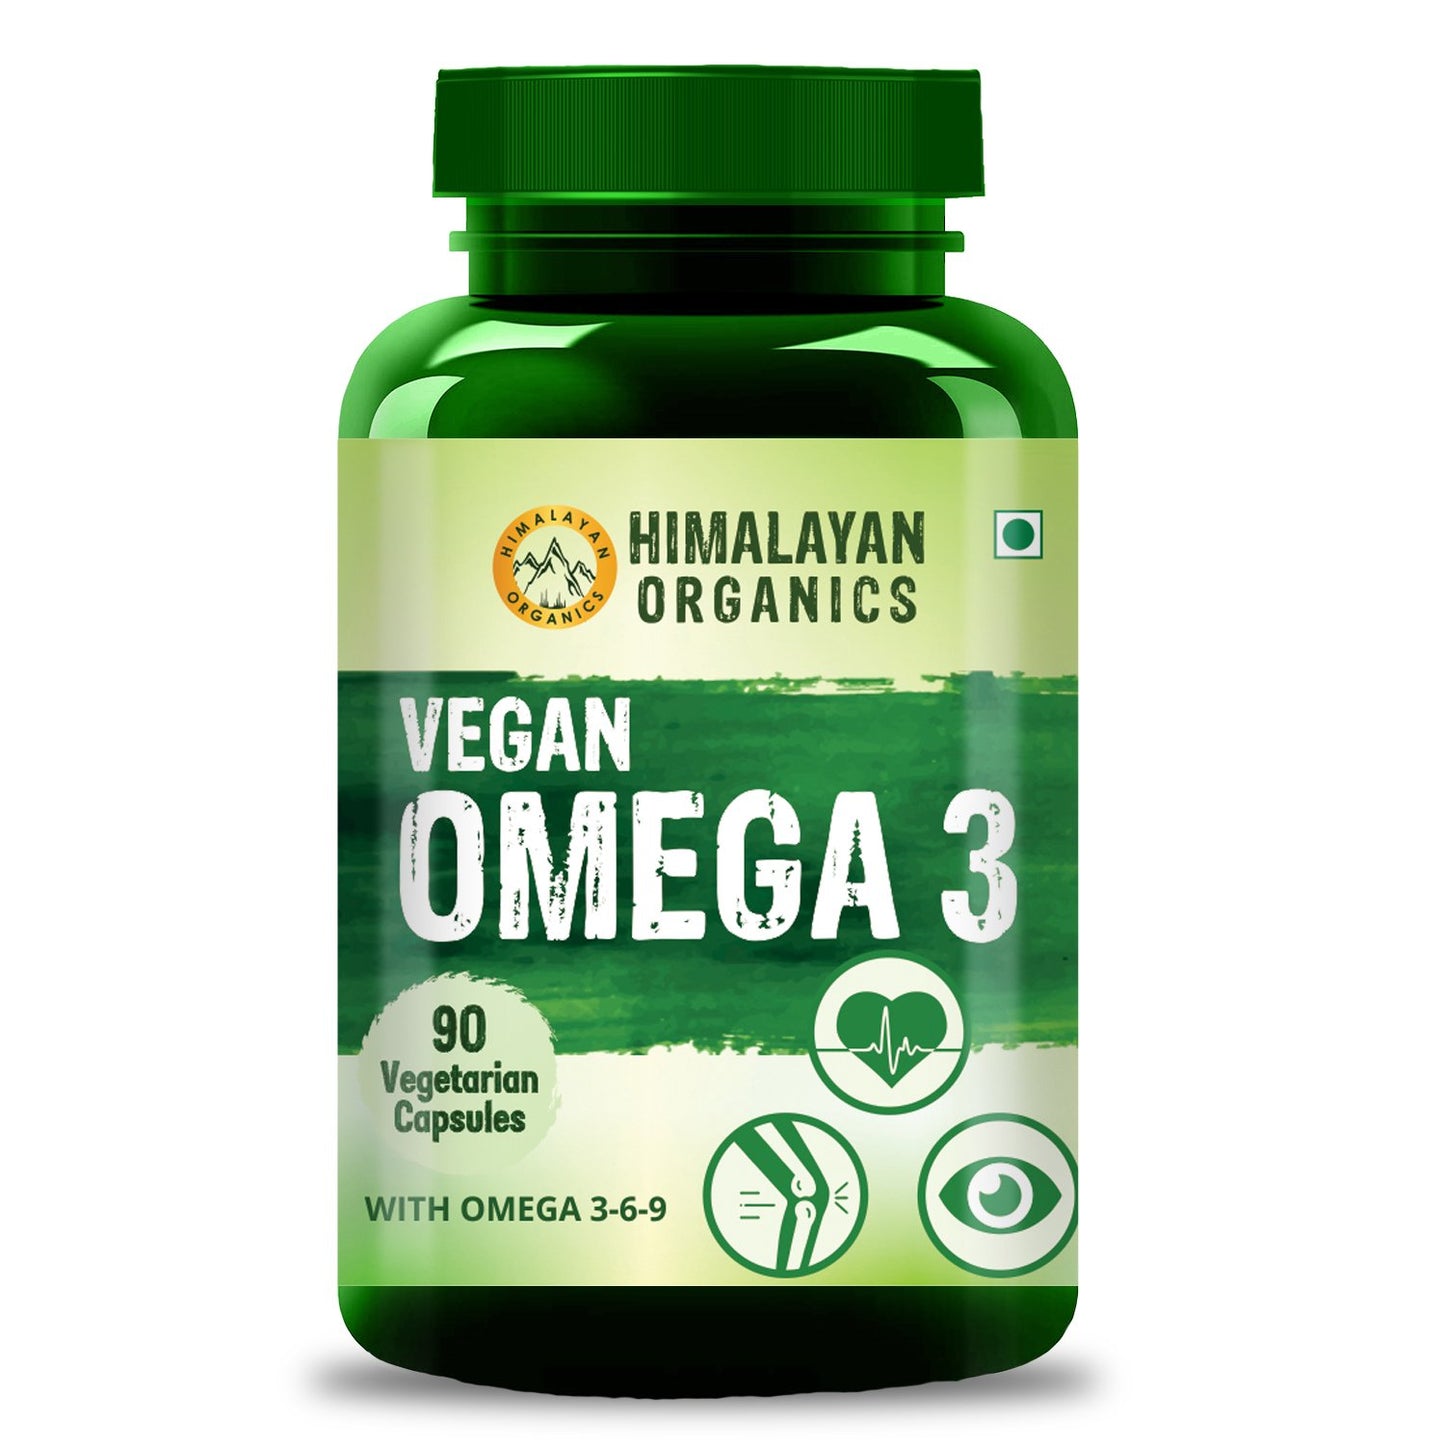 Himalayan Organics Vegan Omega 3 For Healthy Heart, Eyes & Joints 